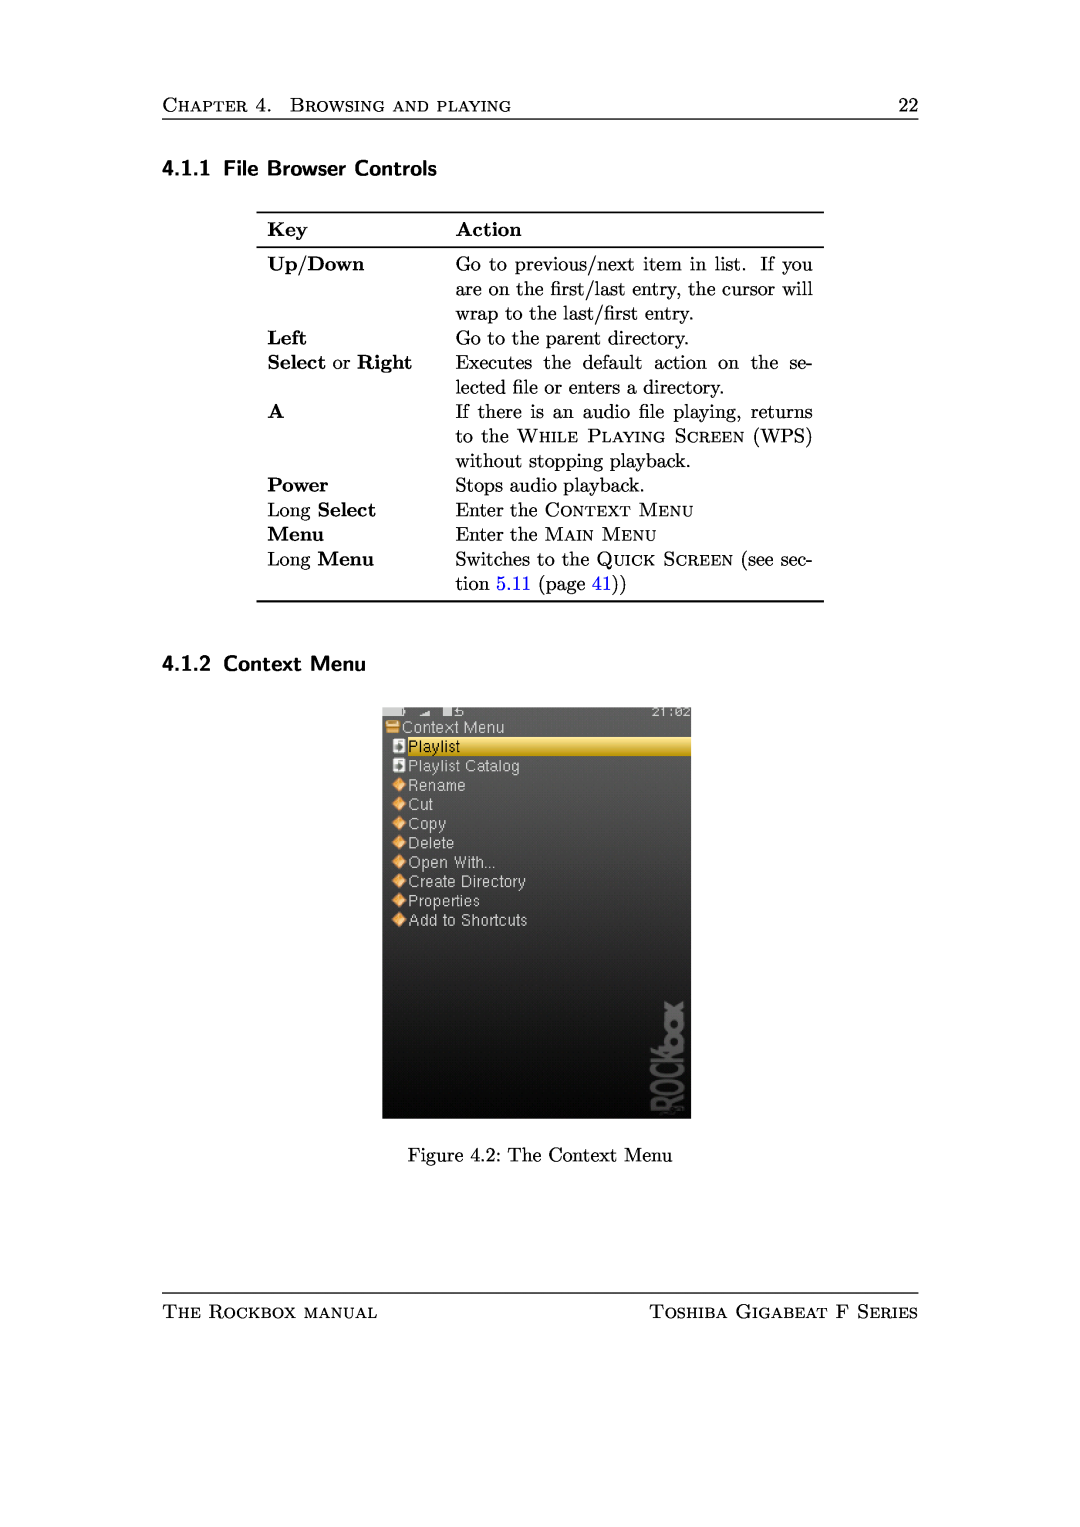 Toshiba F Series manual File Browser Controls, Context Menu 